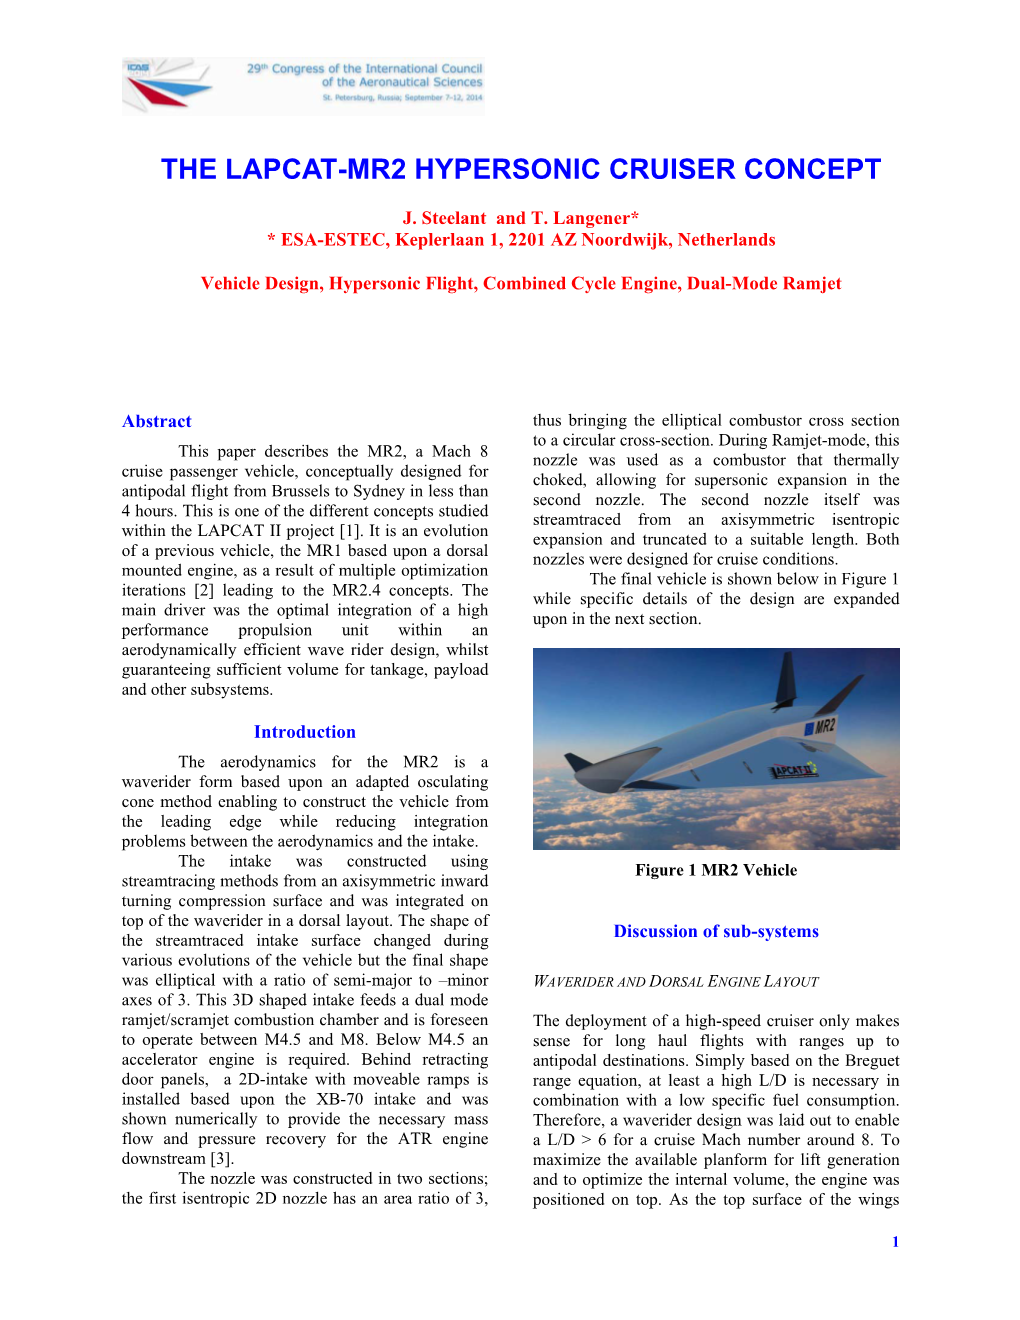 The Lapcat-Mr2 Hypersonic Cruiser Concept